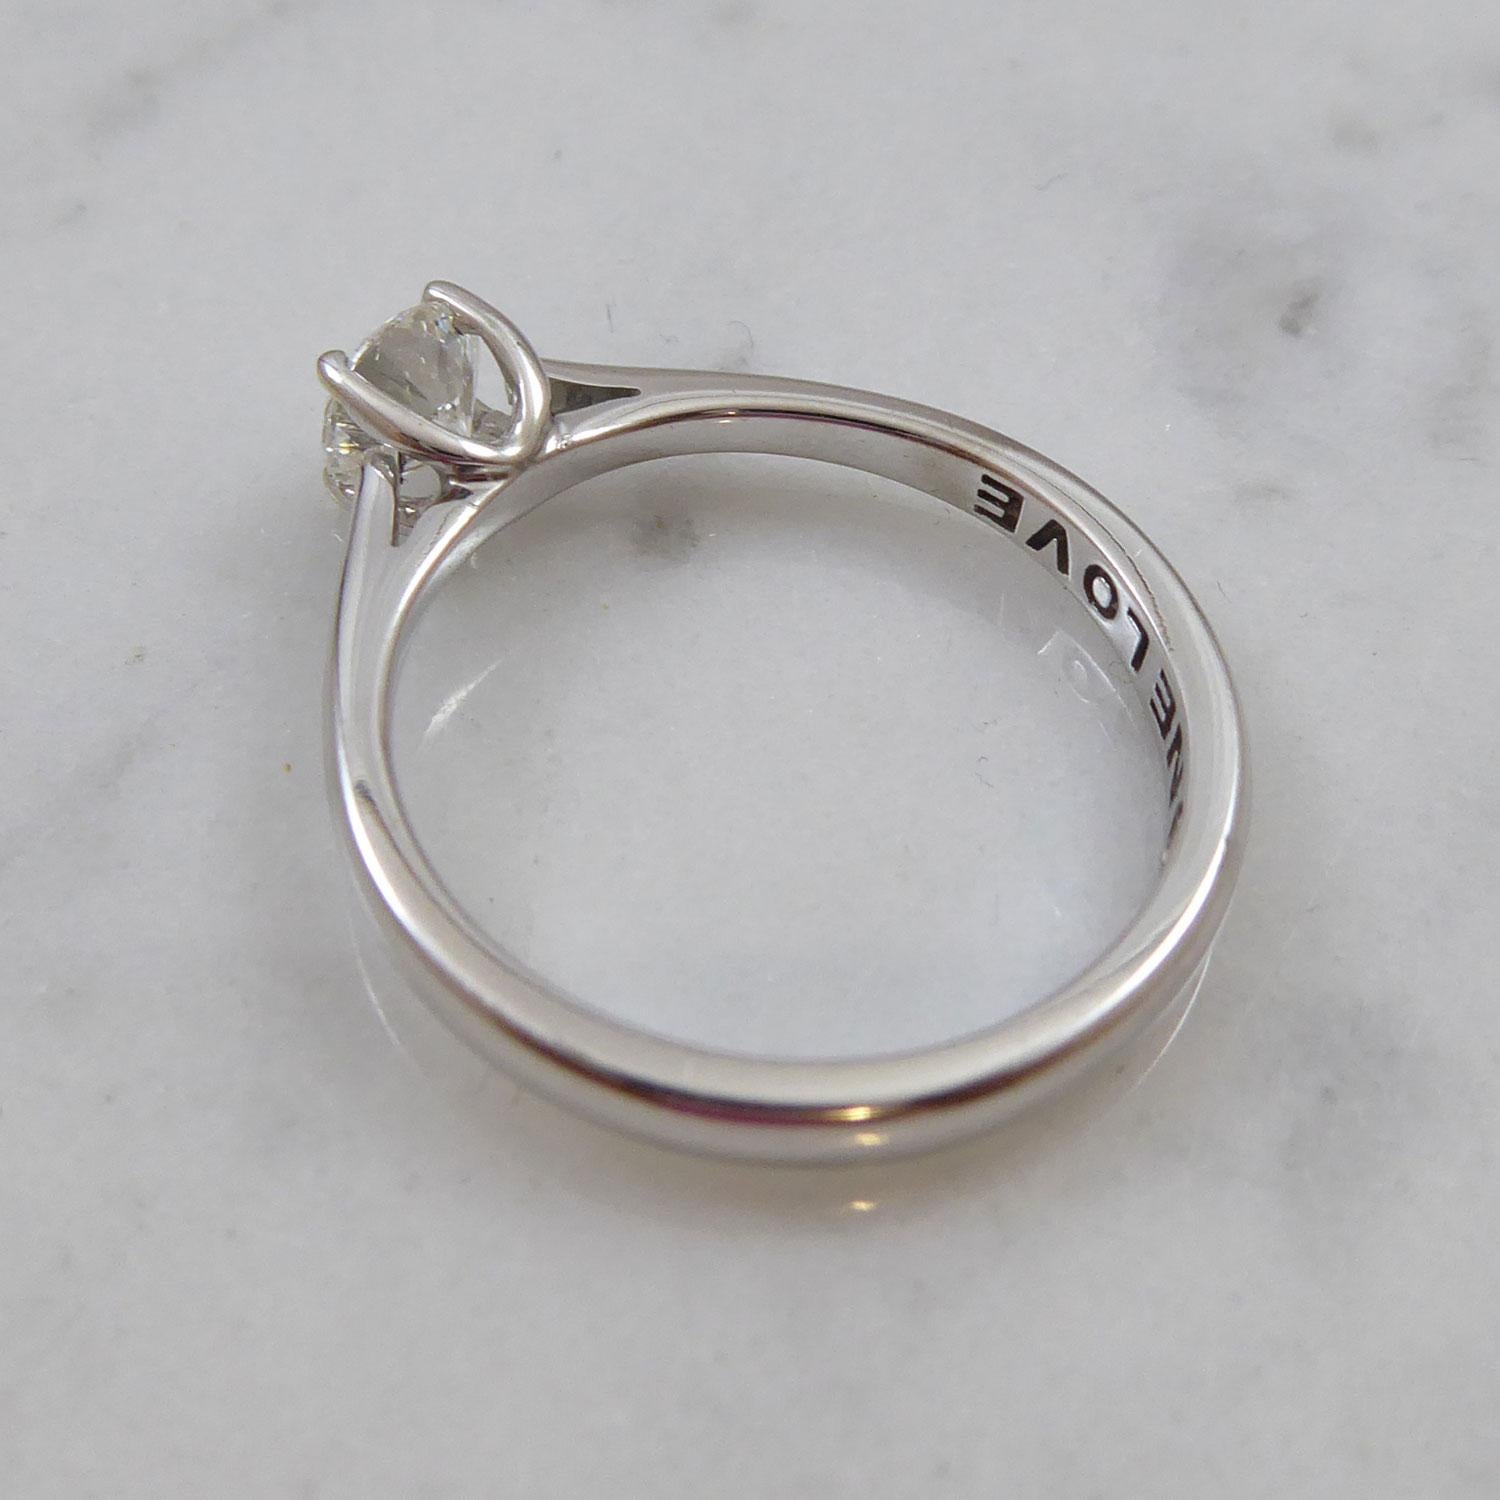 Brilliant Cut 0.50 Carat Diamond Solitaire Ring in 18ct White Gold, Inscribed 